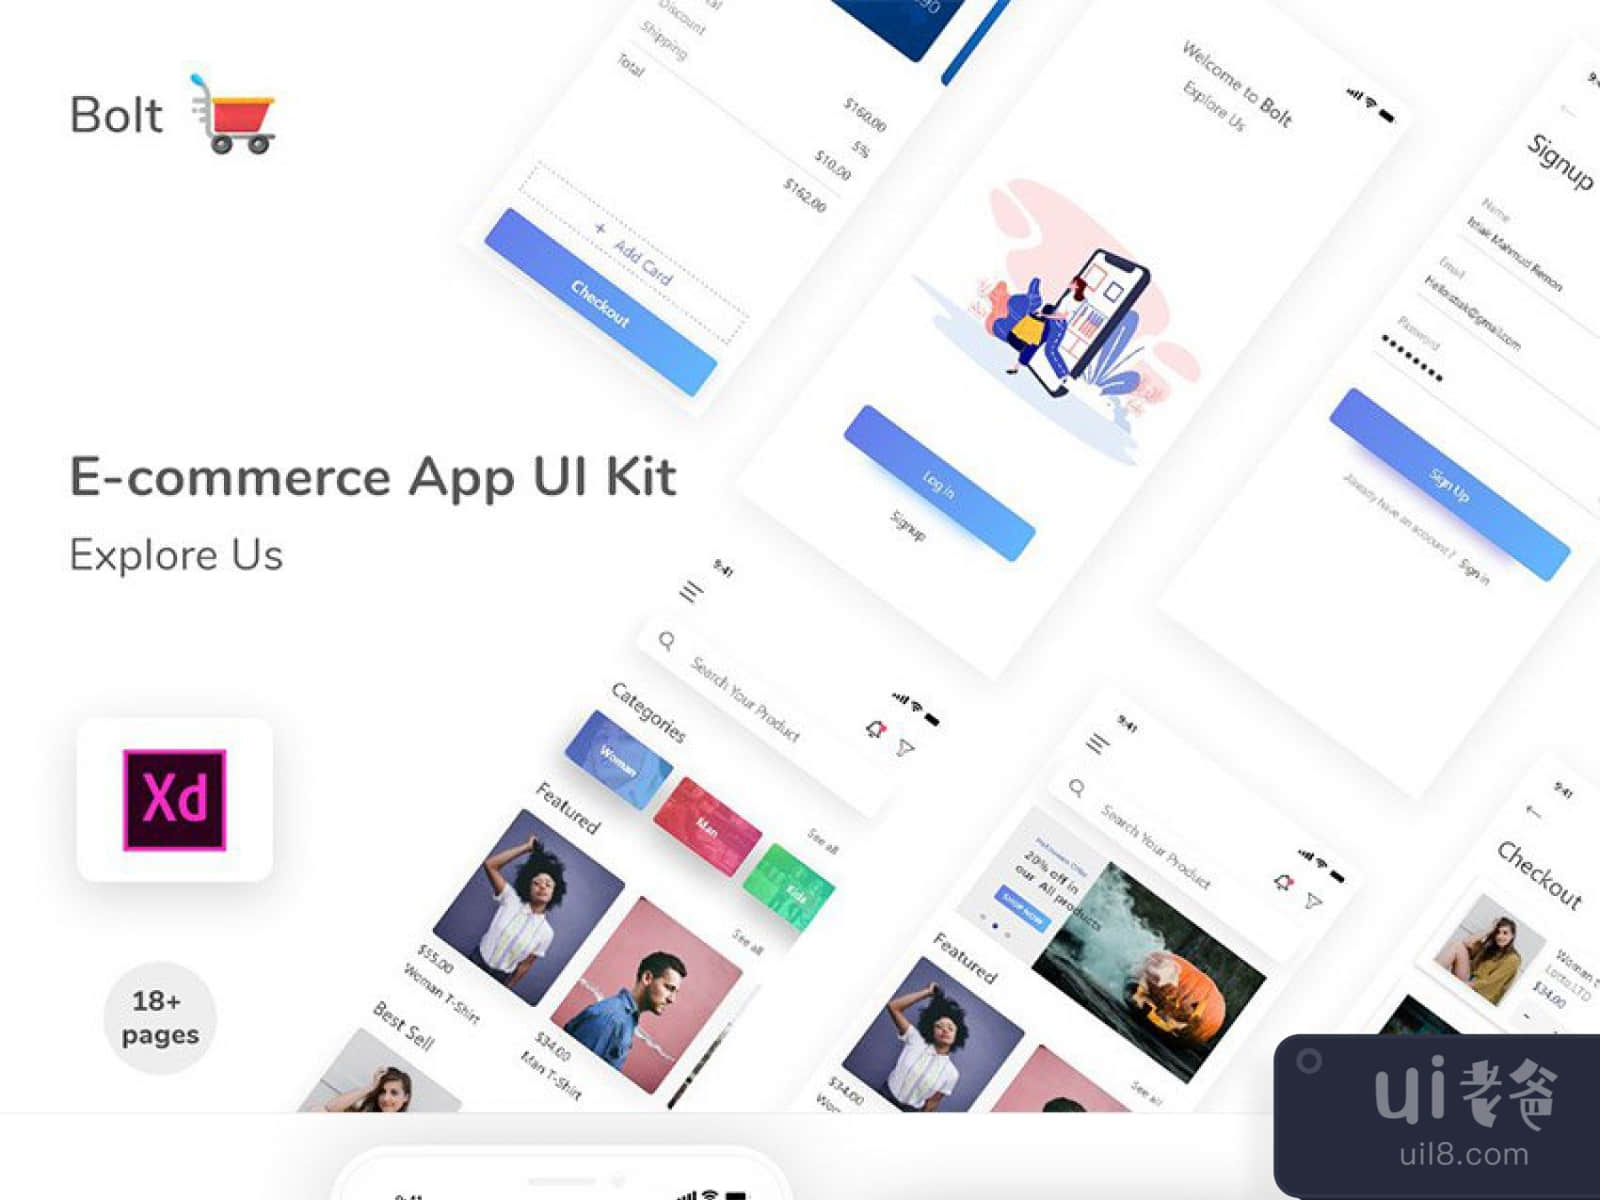 E-commerce UI App Design for Figma and Adobe XD No 1